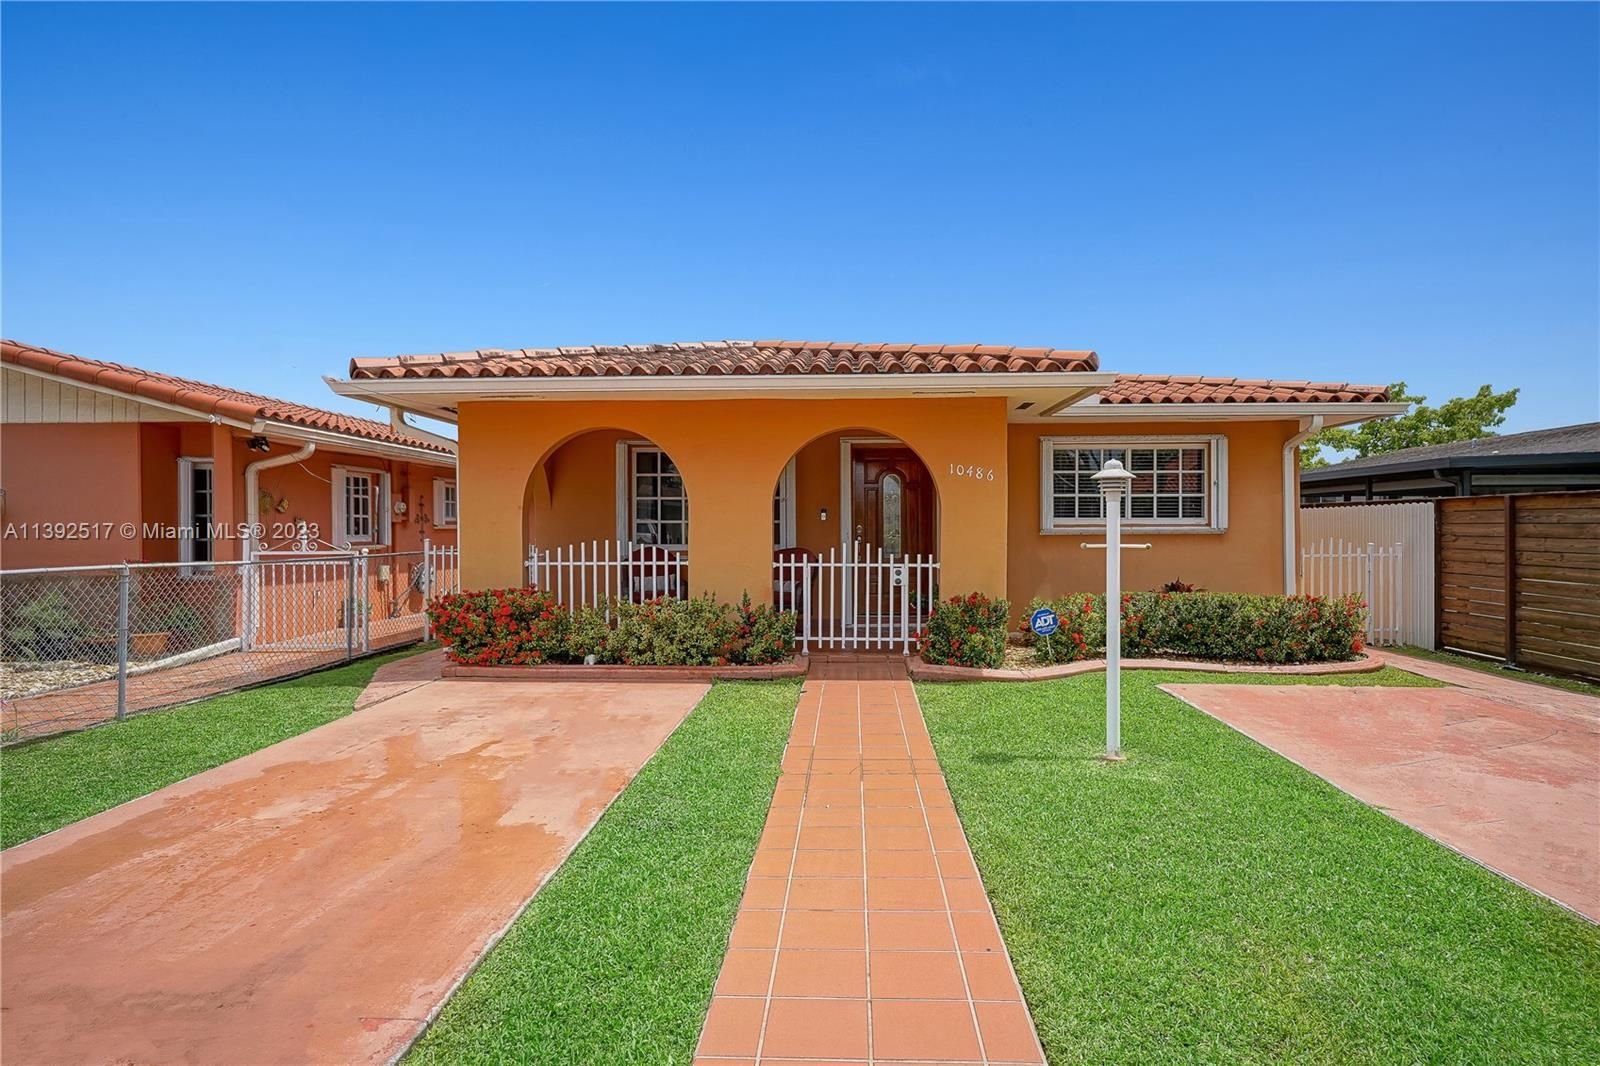 Real estate property located at 10486 27th St, Miami-Dade County, Miami, FL